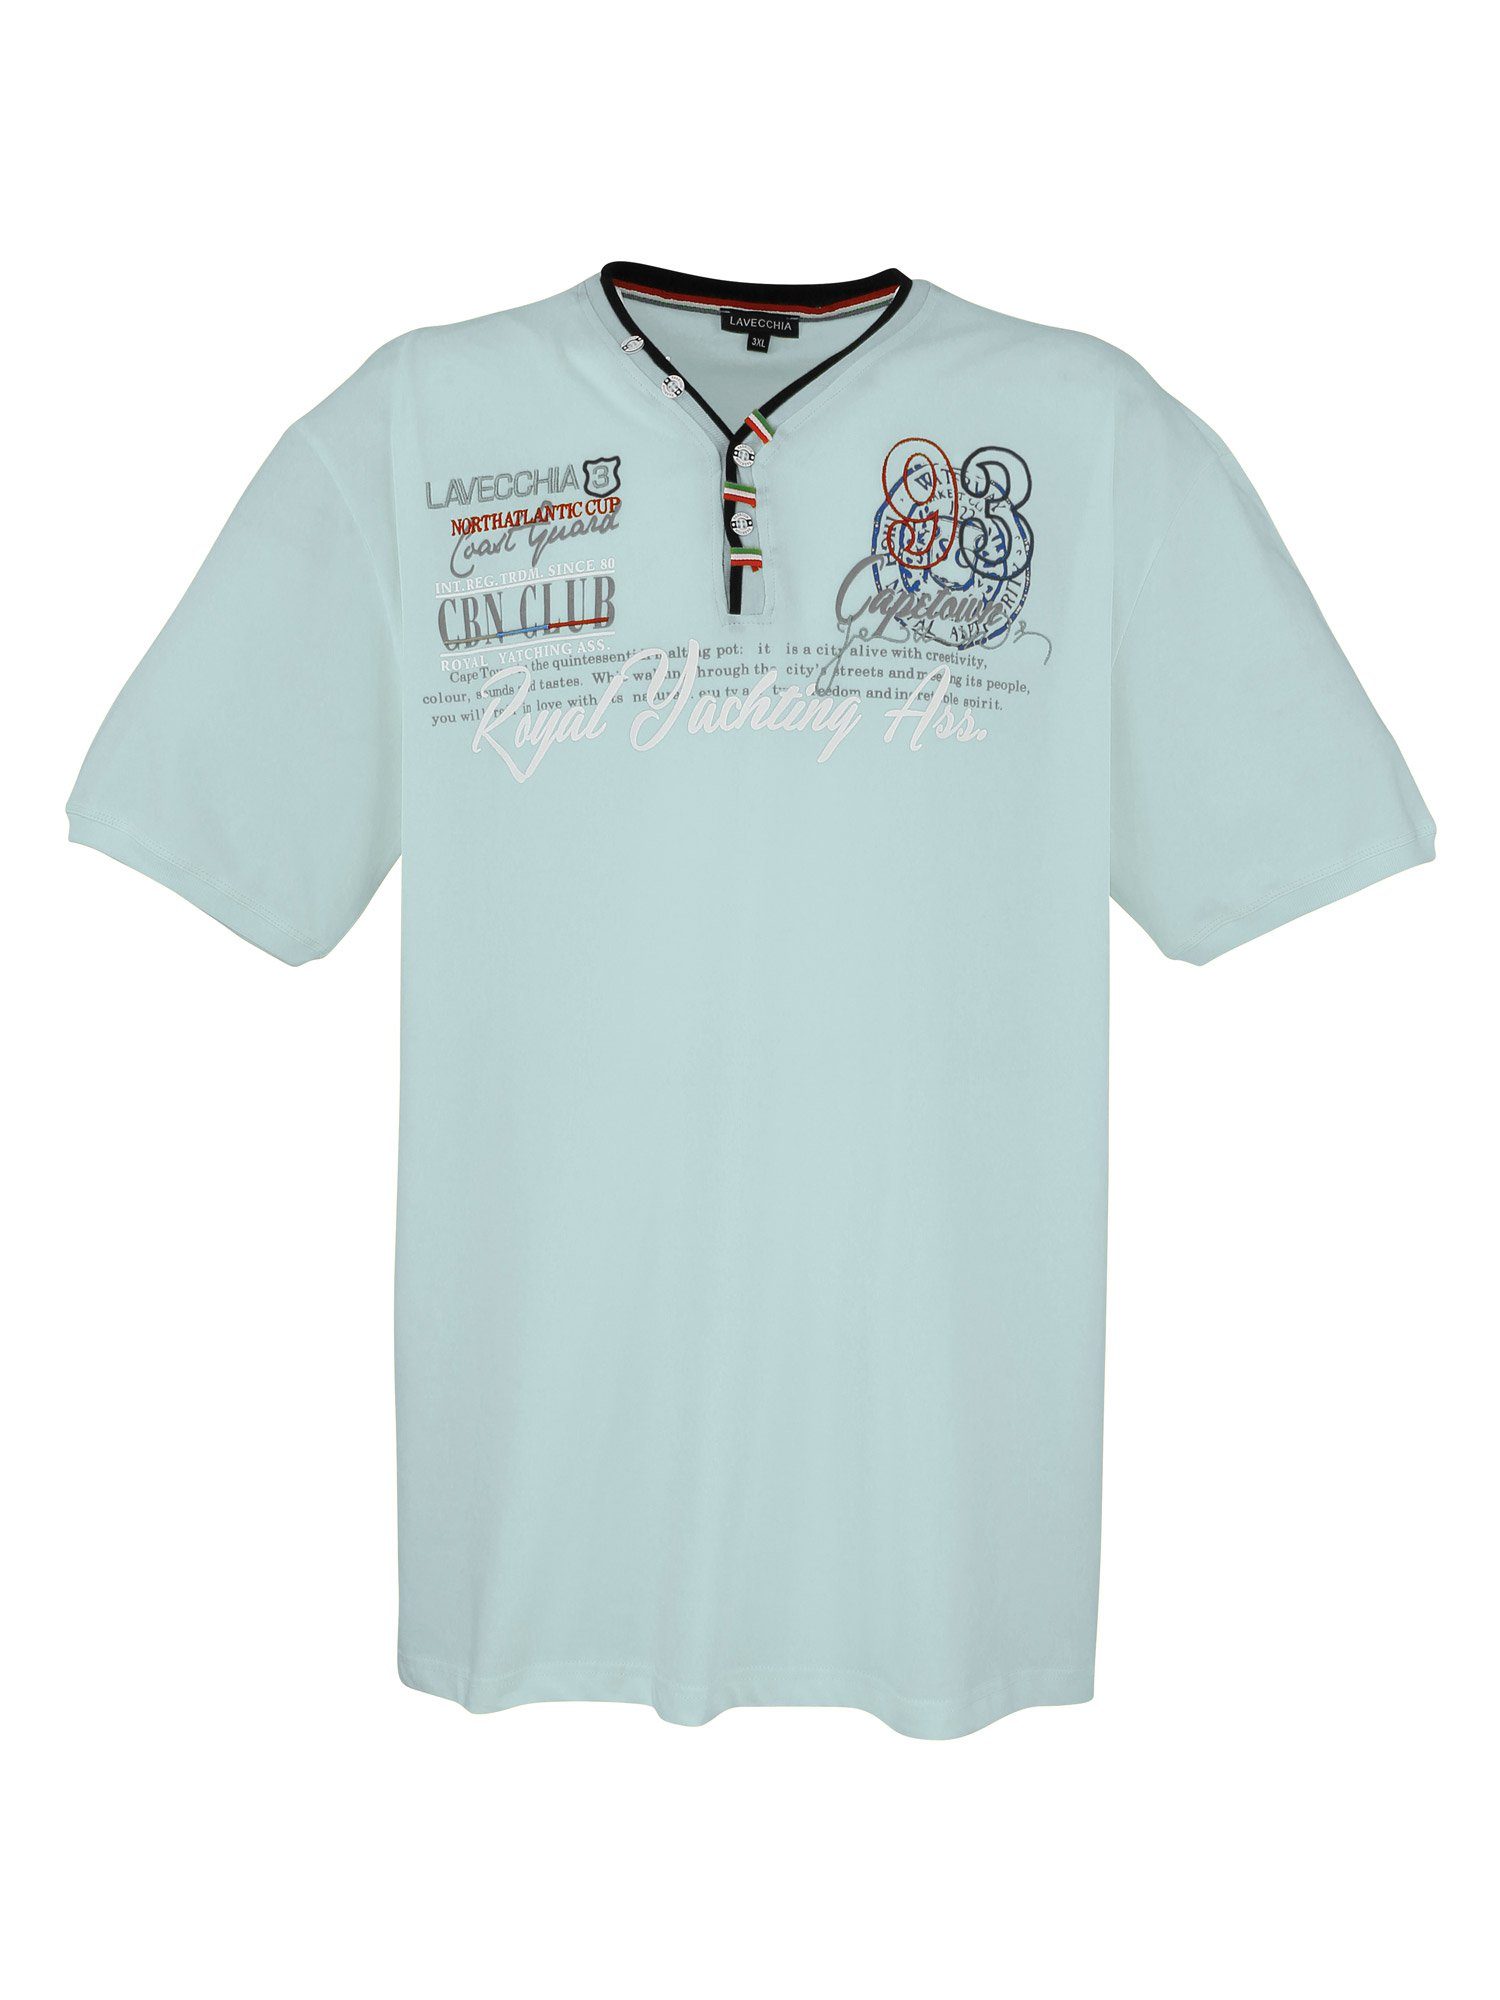 V-Shirt mint Herren Herrenshirt Lavecchia LV-608 T-Shirt Übergrößen V-Ausschnitt